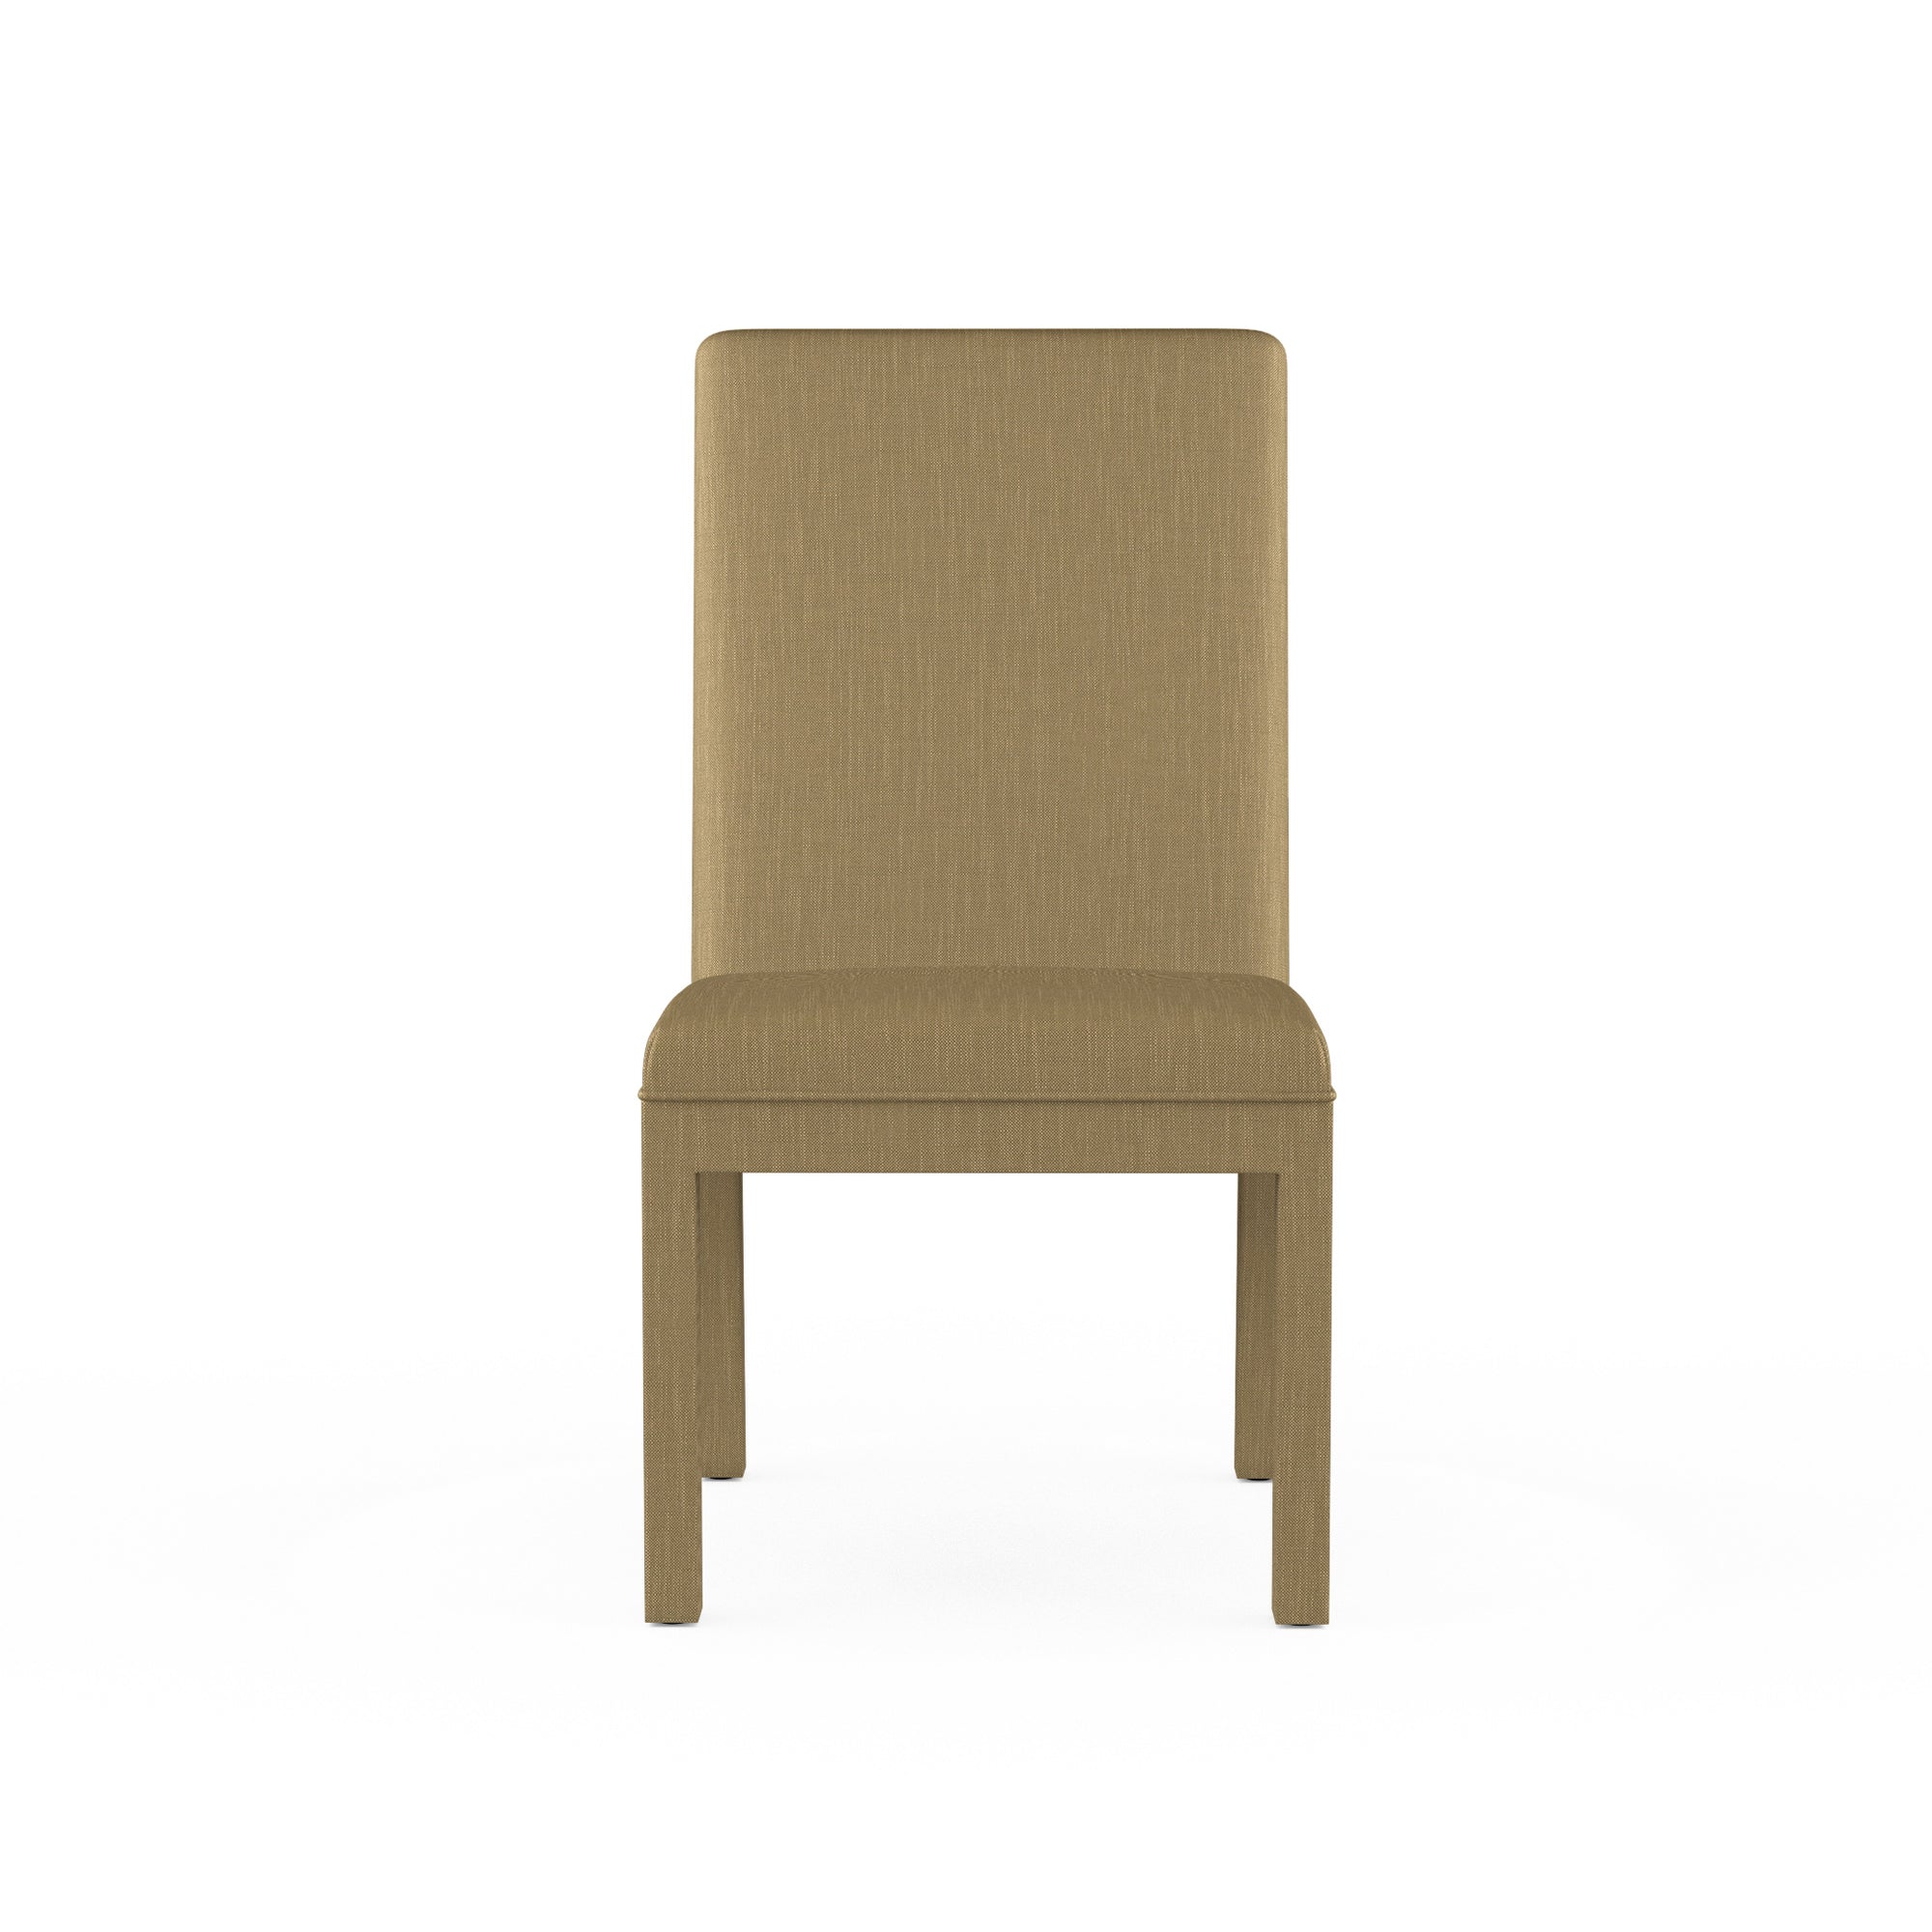 Aleksandar Dining Chair - Marzipan Box Weave Linen